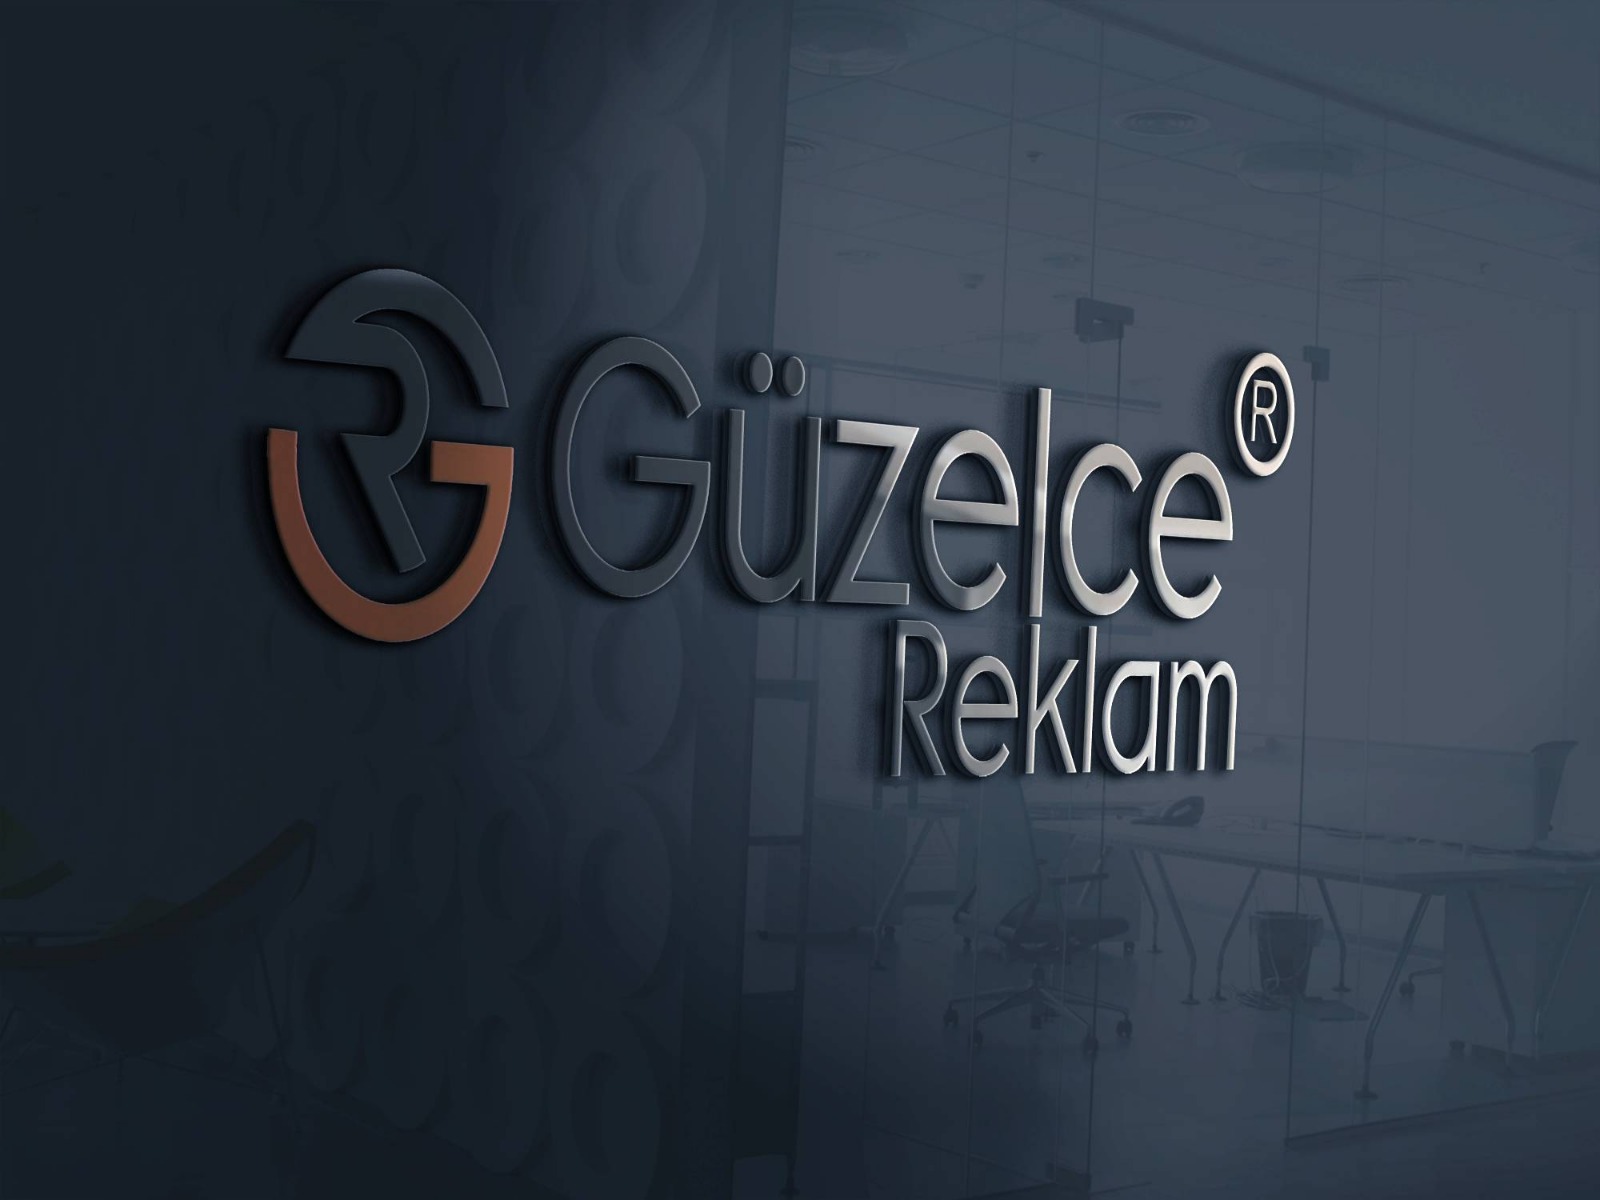 guzelce-reklam-logo-2